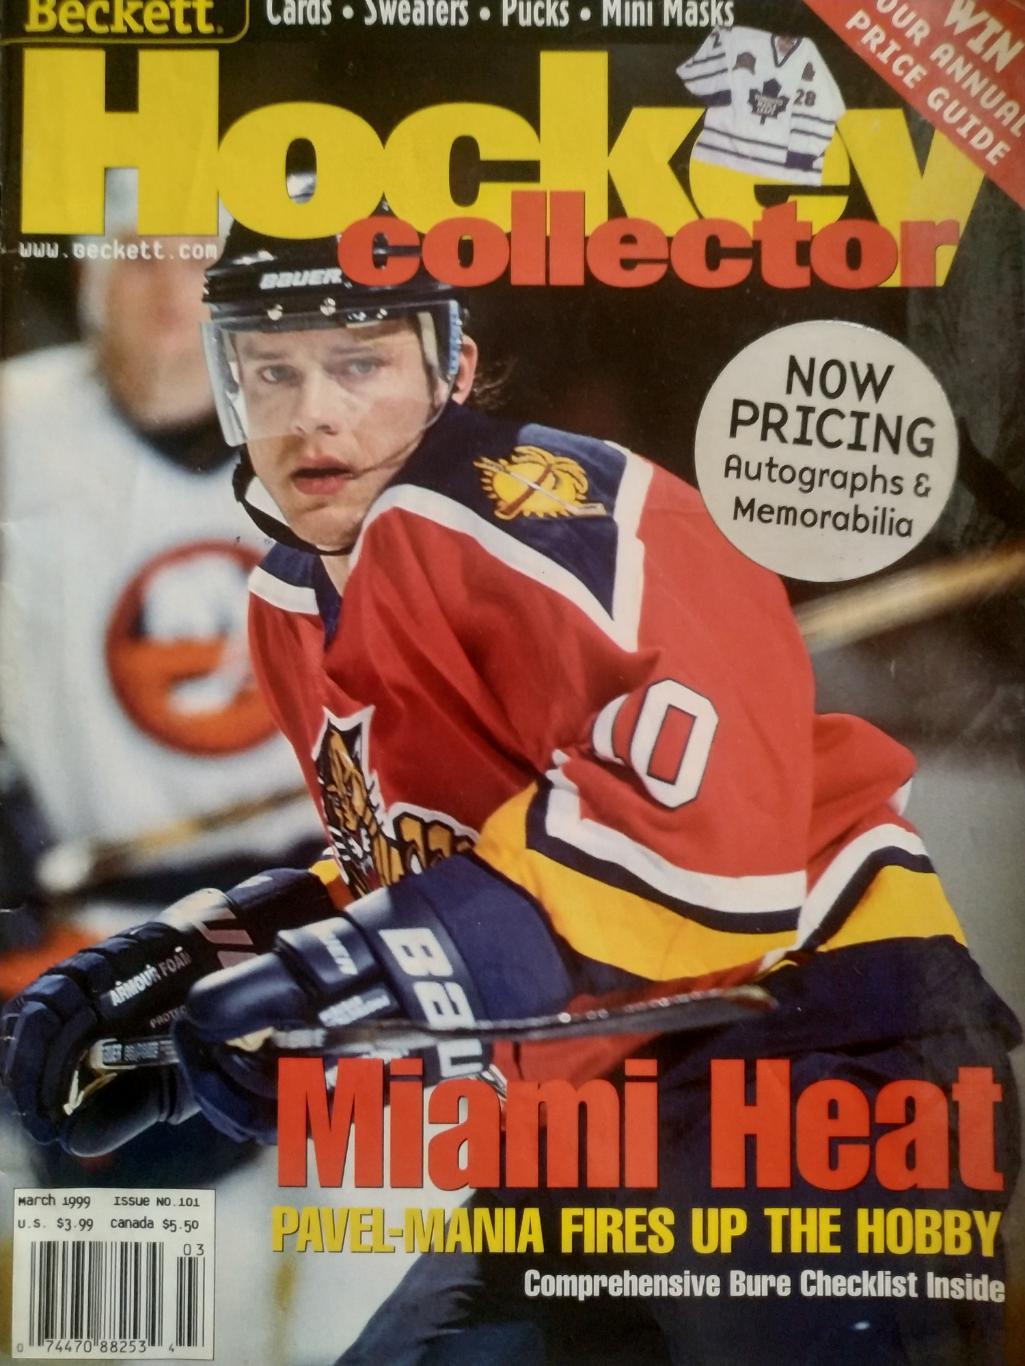 ЖУРНАЛ ЕЖЕМЕСЯЧНИК ХОККИ БЭККЕТ НХЛ NHL 1999 MAR BECKETT HOCKEY MAGAZINE #101